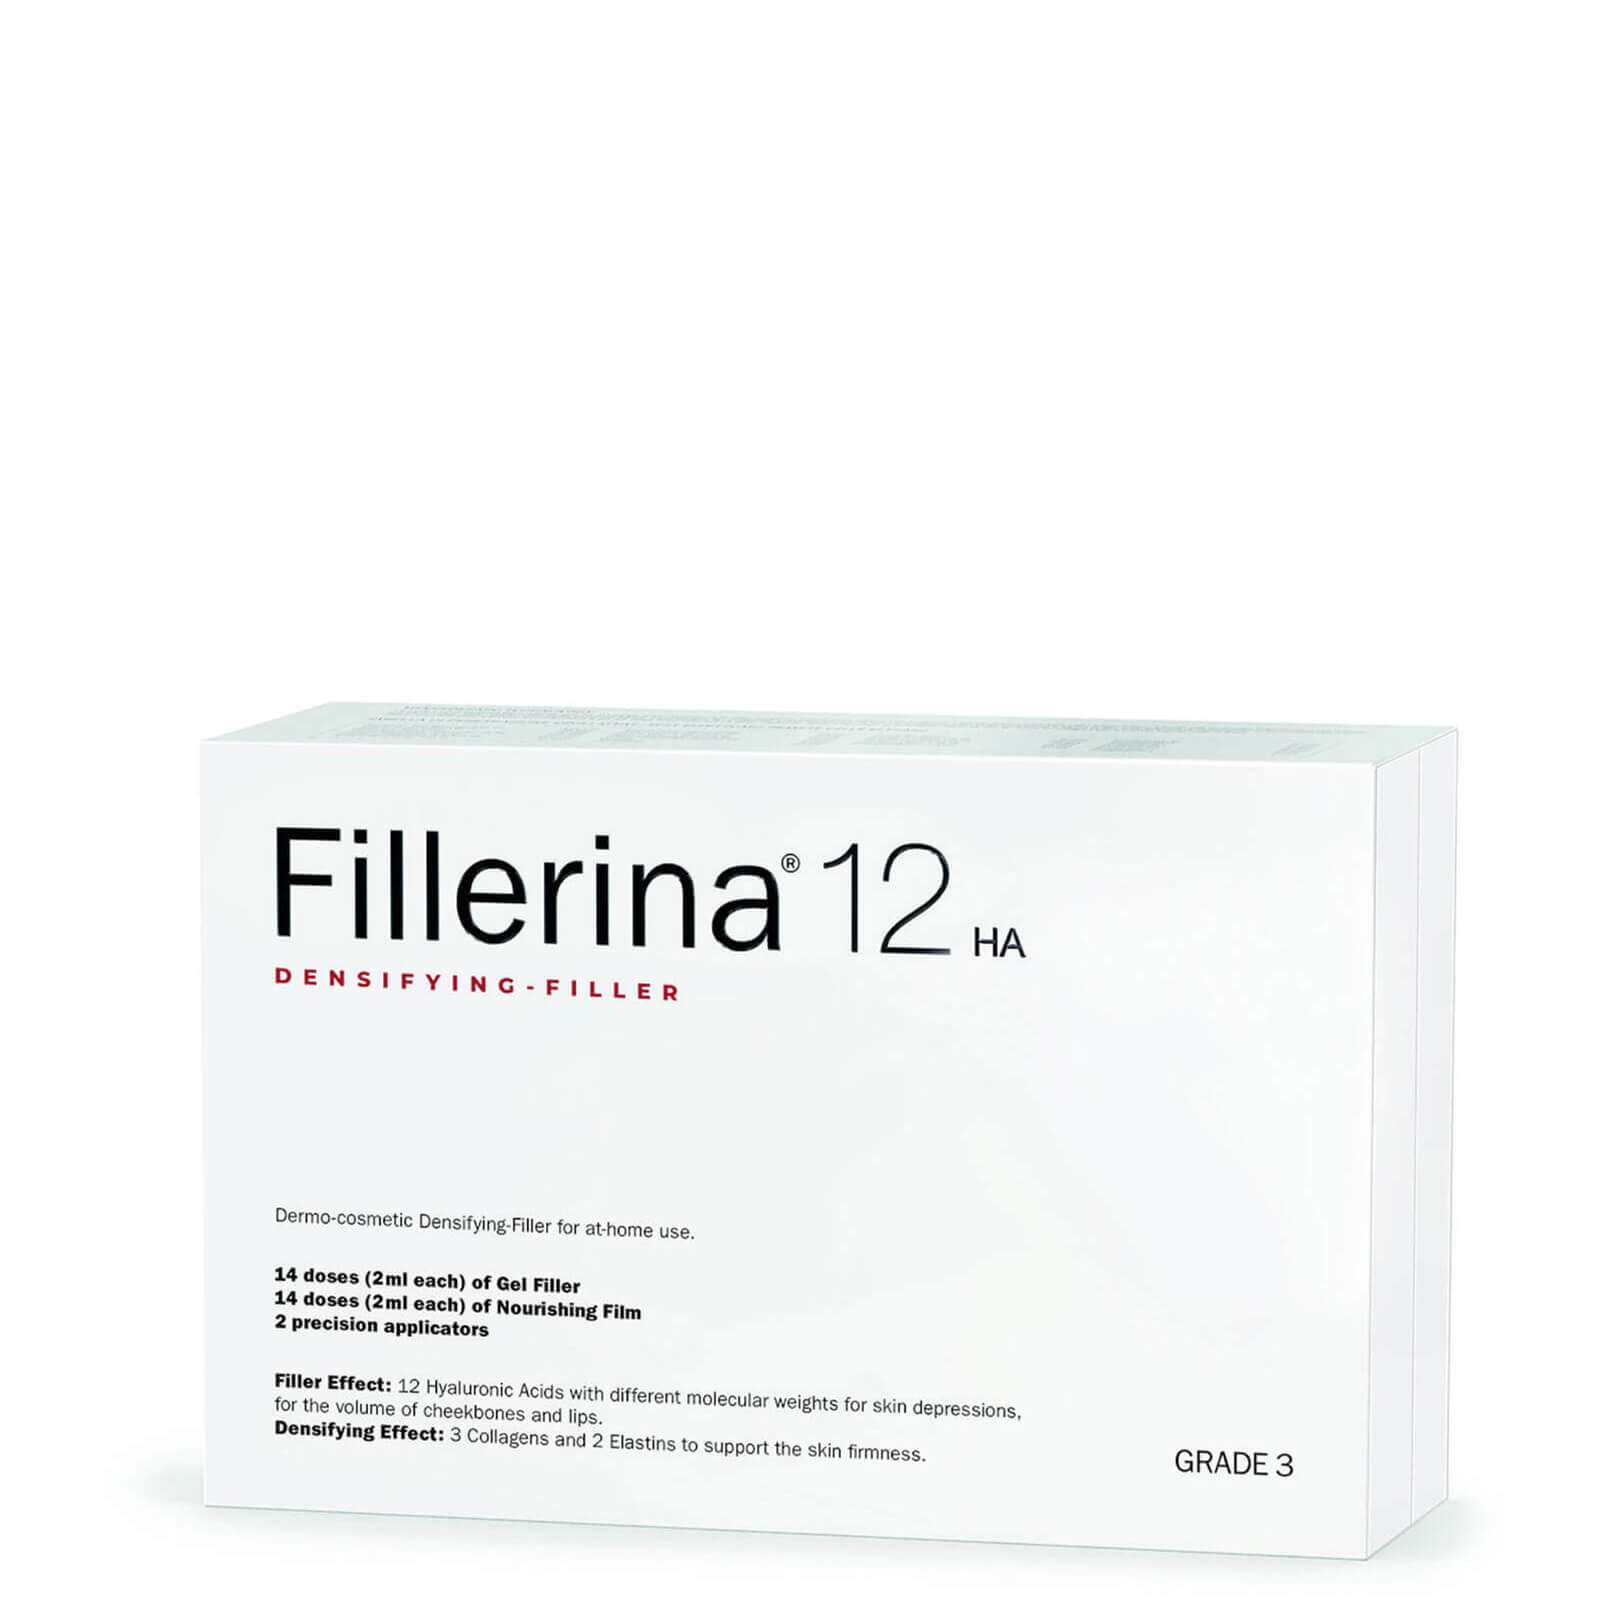 Fillerina 12 Densifying-Filler Intensive Filler Treatment - Grade 3 2 x 30ml